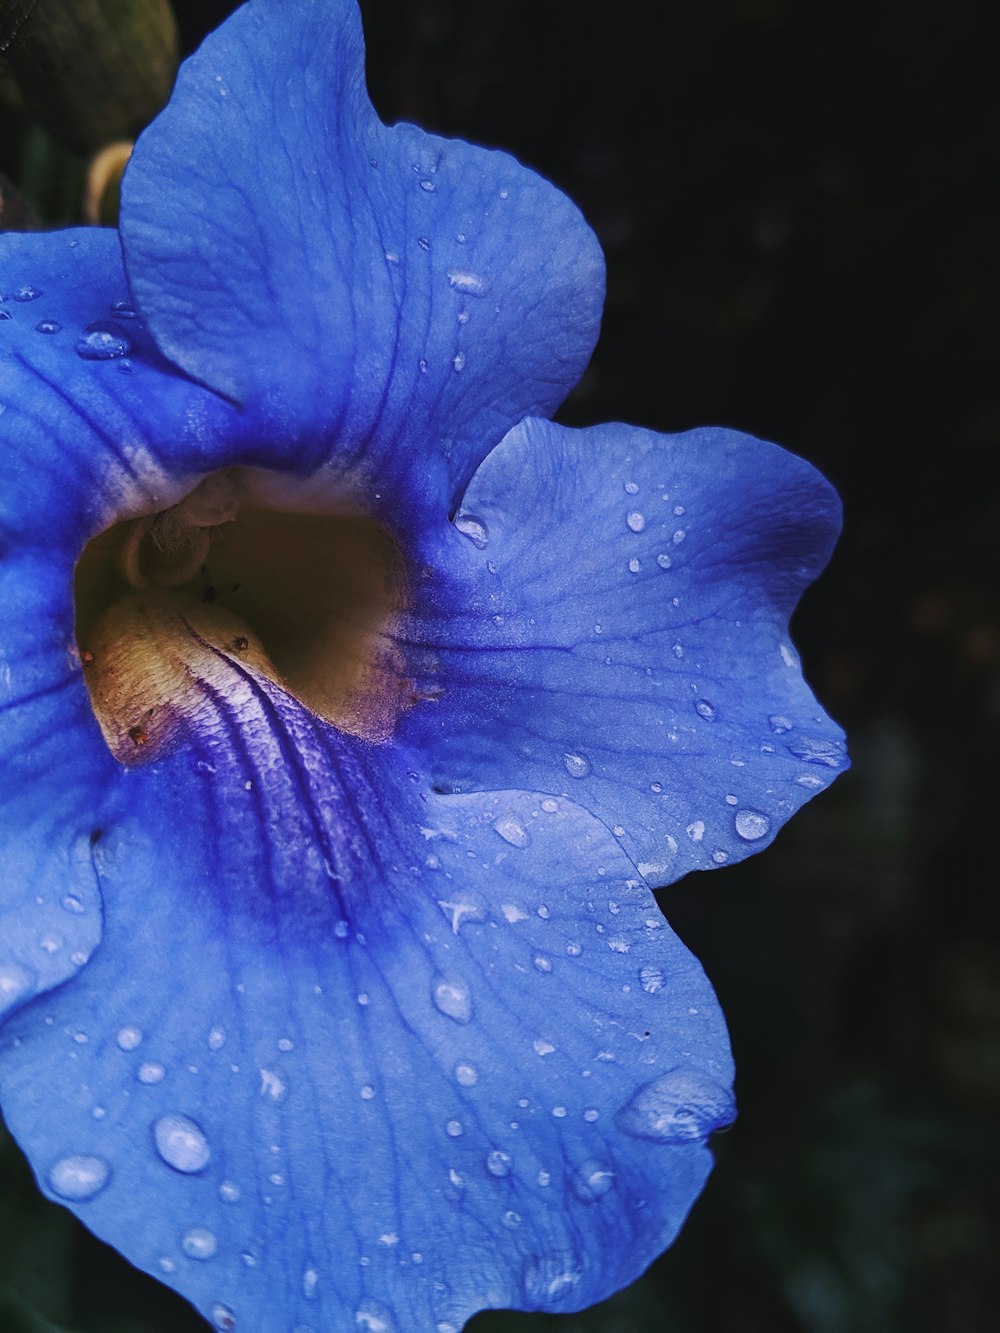 blue-petaled flower with dew